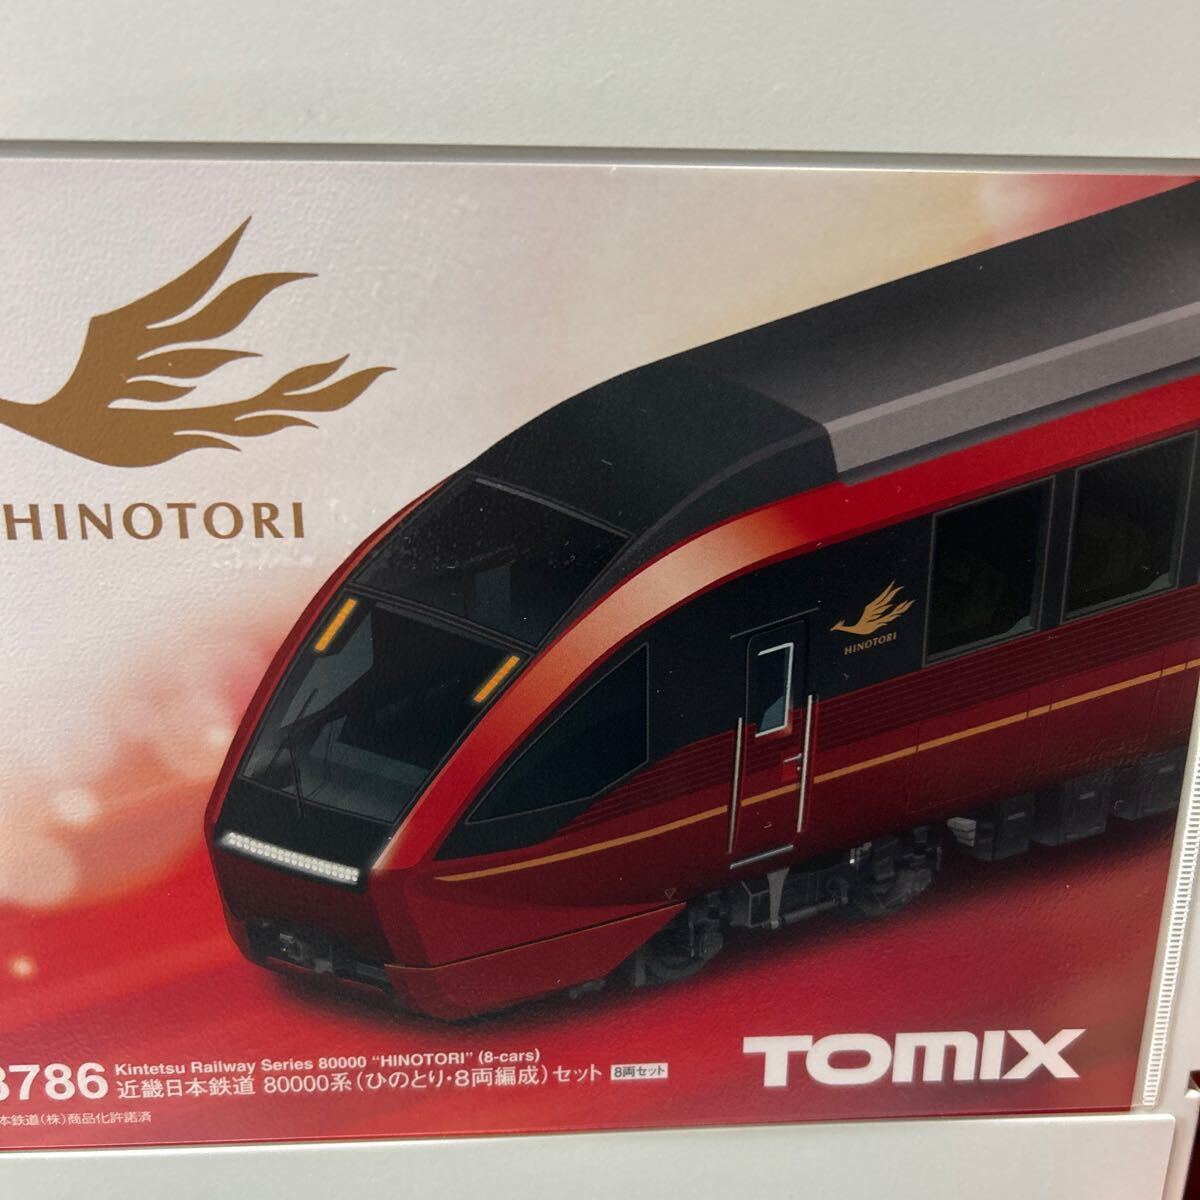  TOMIX 98786 近畿日本鉄道 80000系(ひのとり・8両編成)セット (中古)_画像2